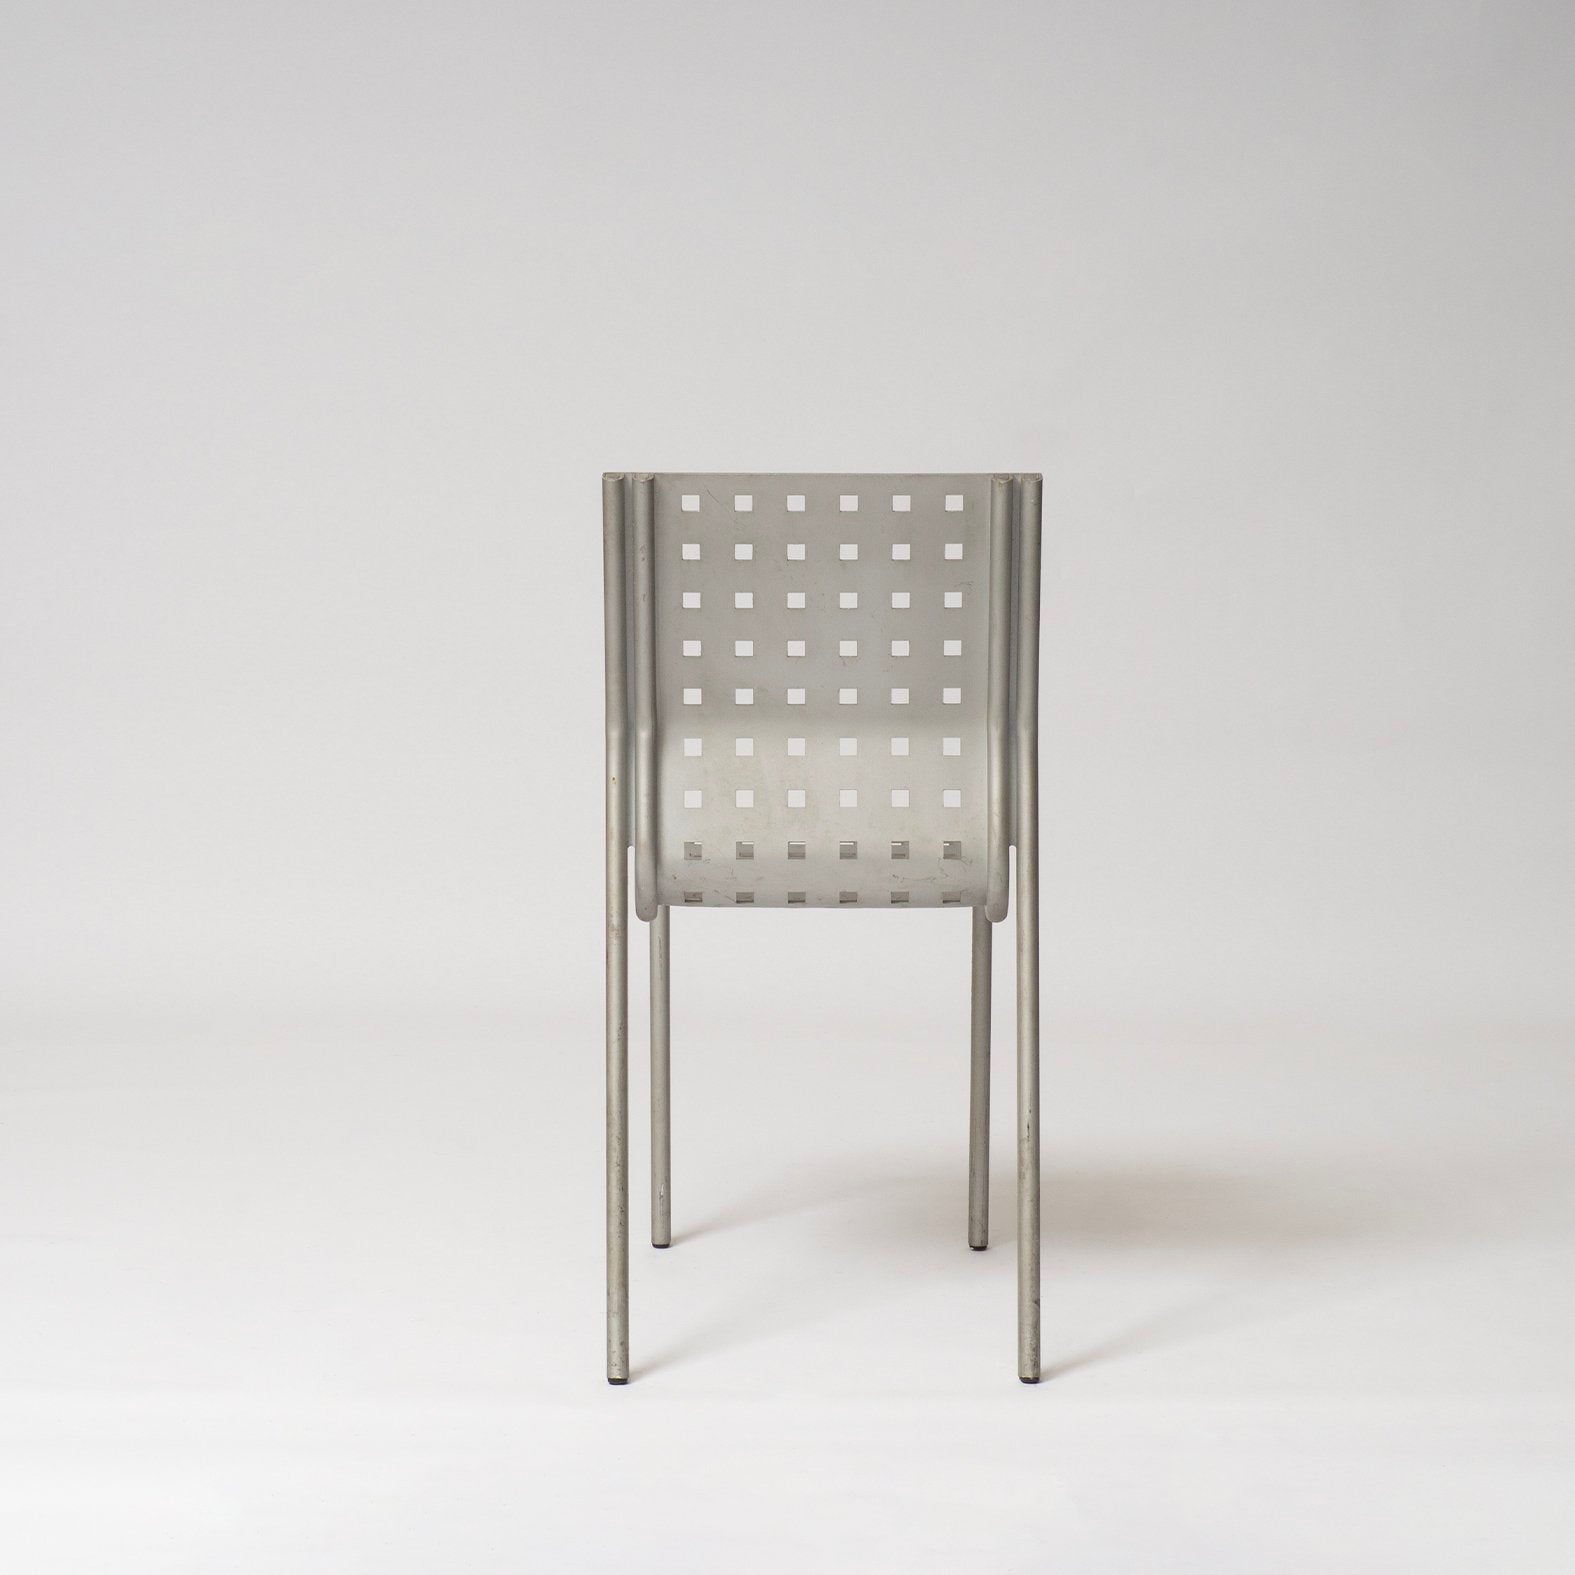 No. 2068 Mirandolina Chairs by Pietro Arosio for Zanotta